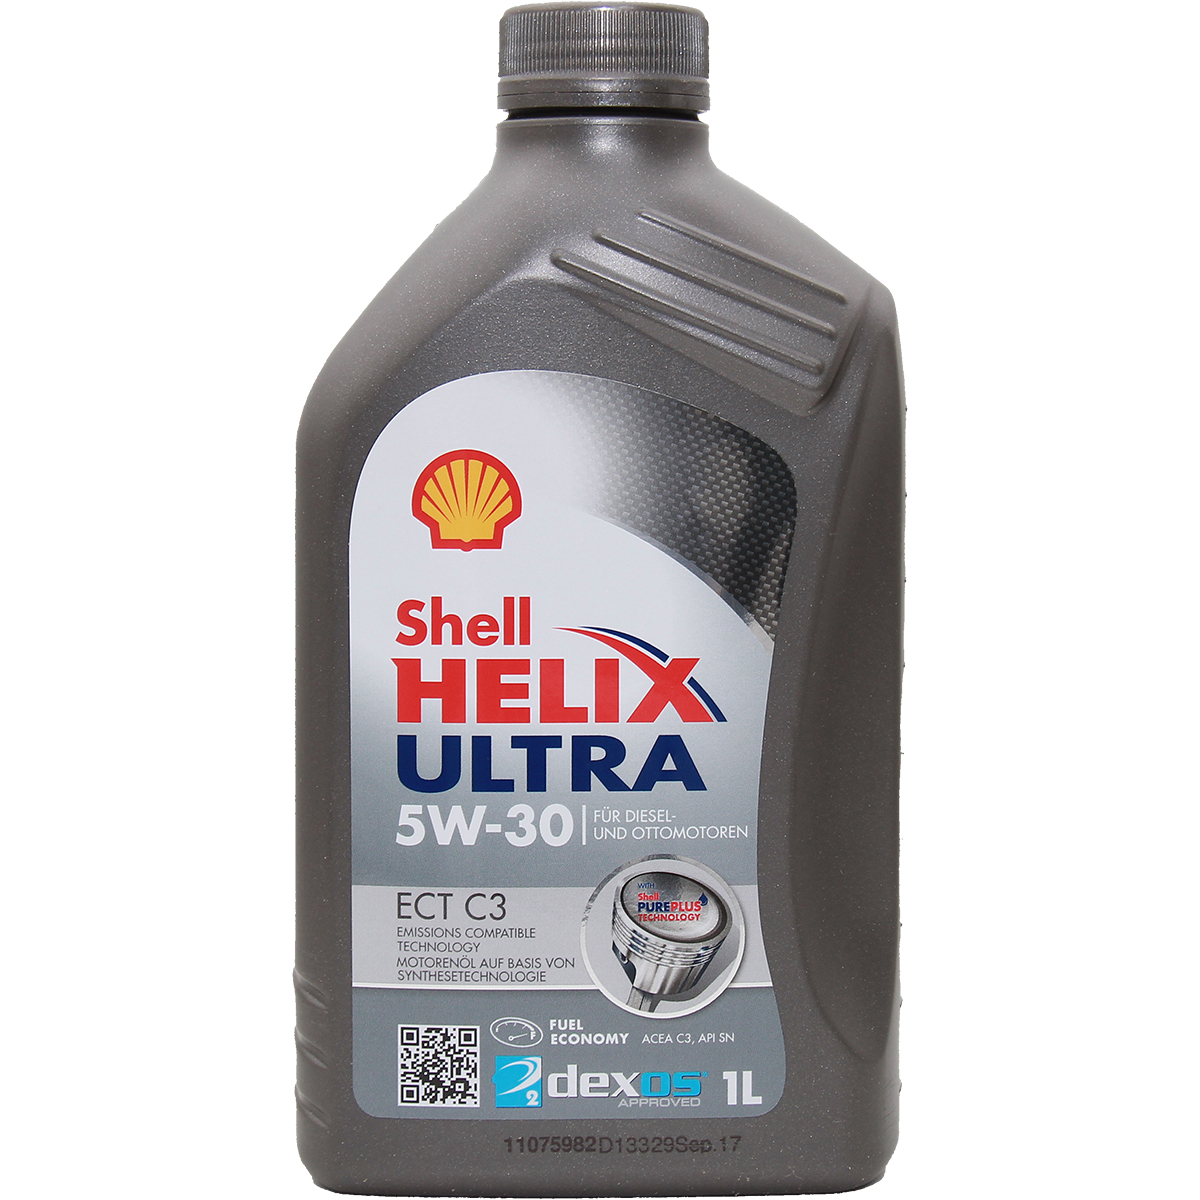 Shell Helix Ultra ECT C3 5W-30 8x1 Liter